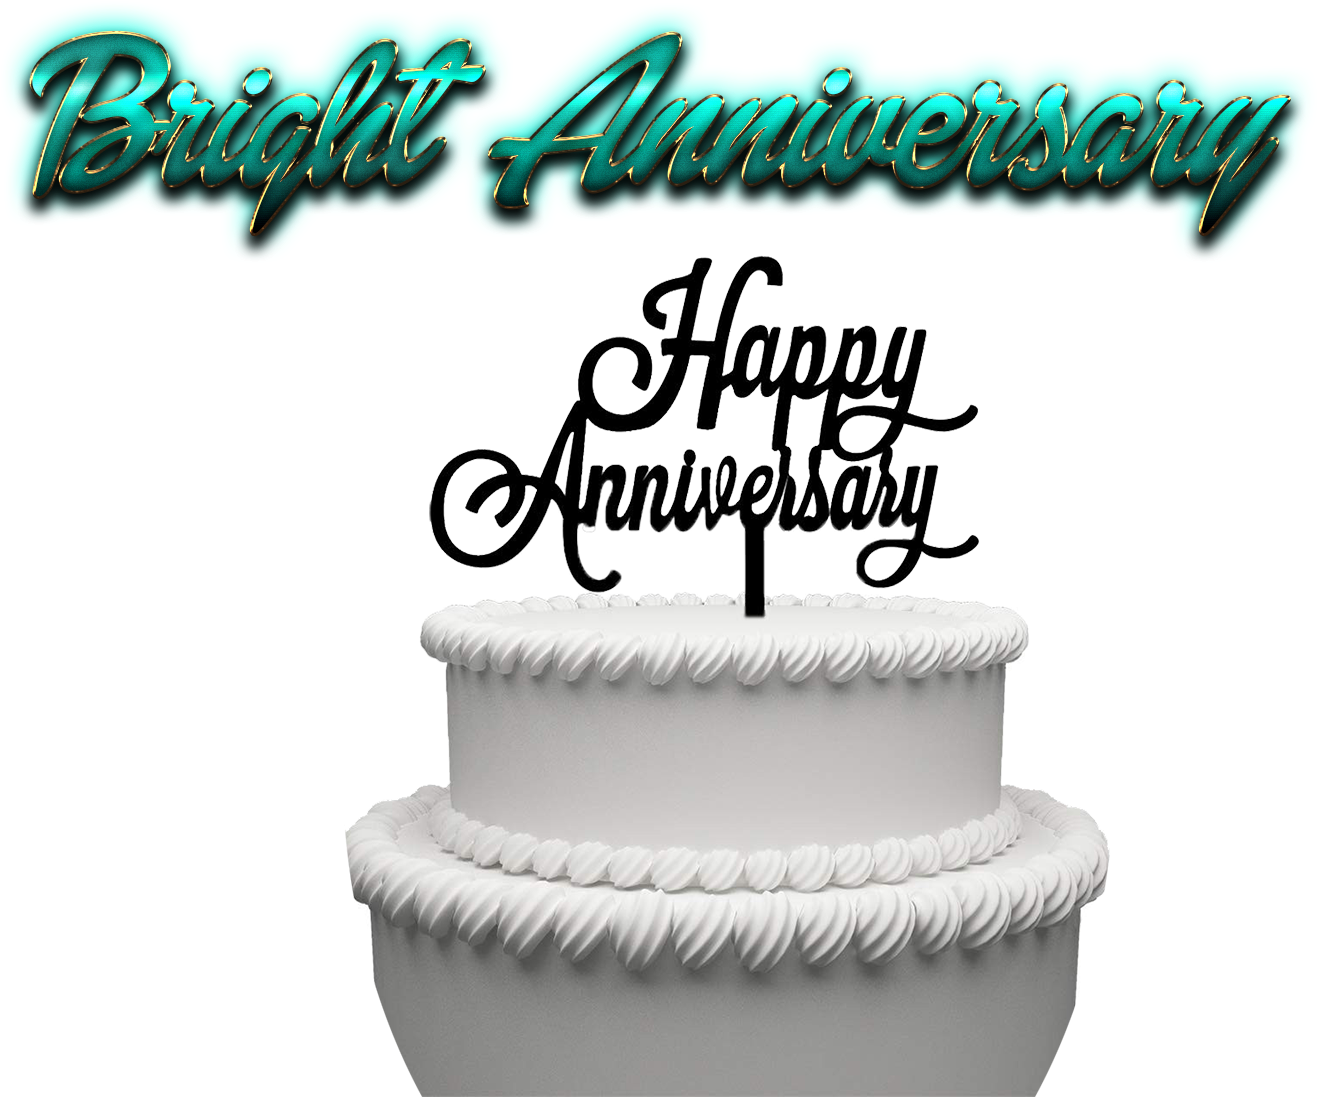 Bright Anniversary Celebration Cake PNG